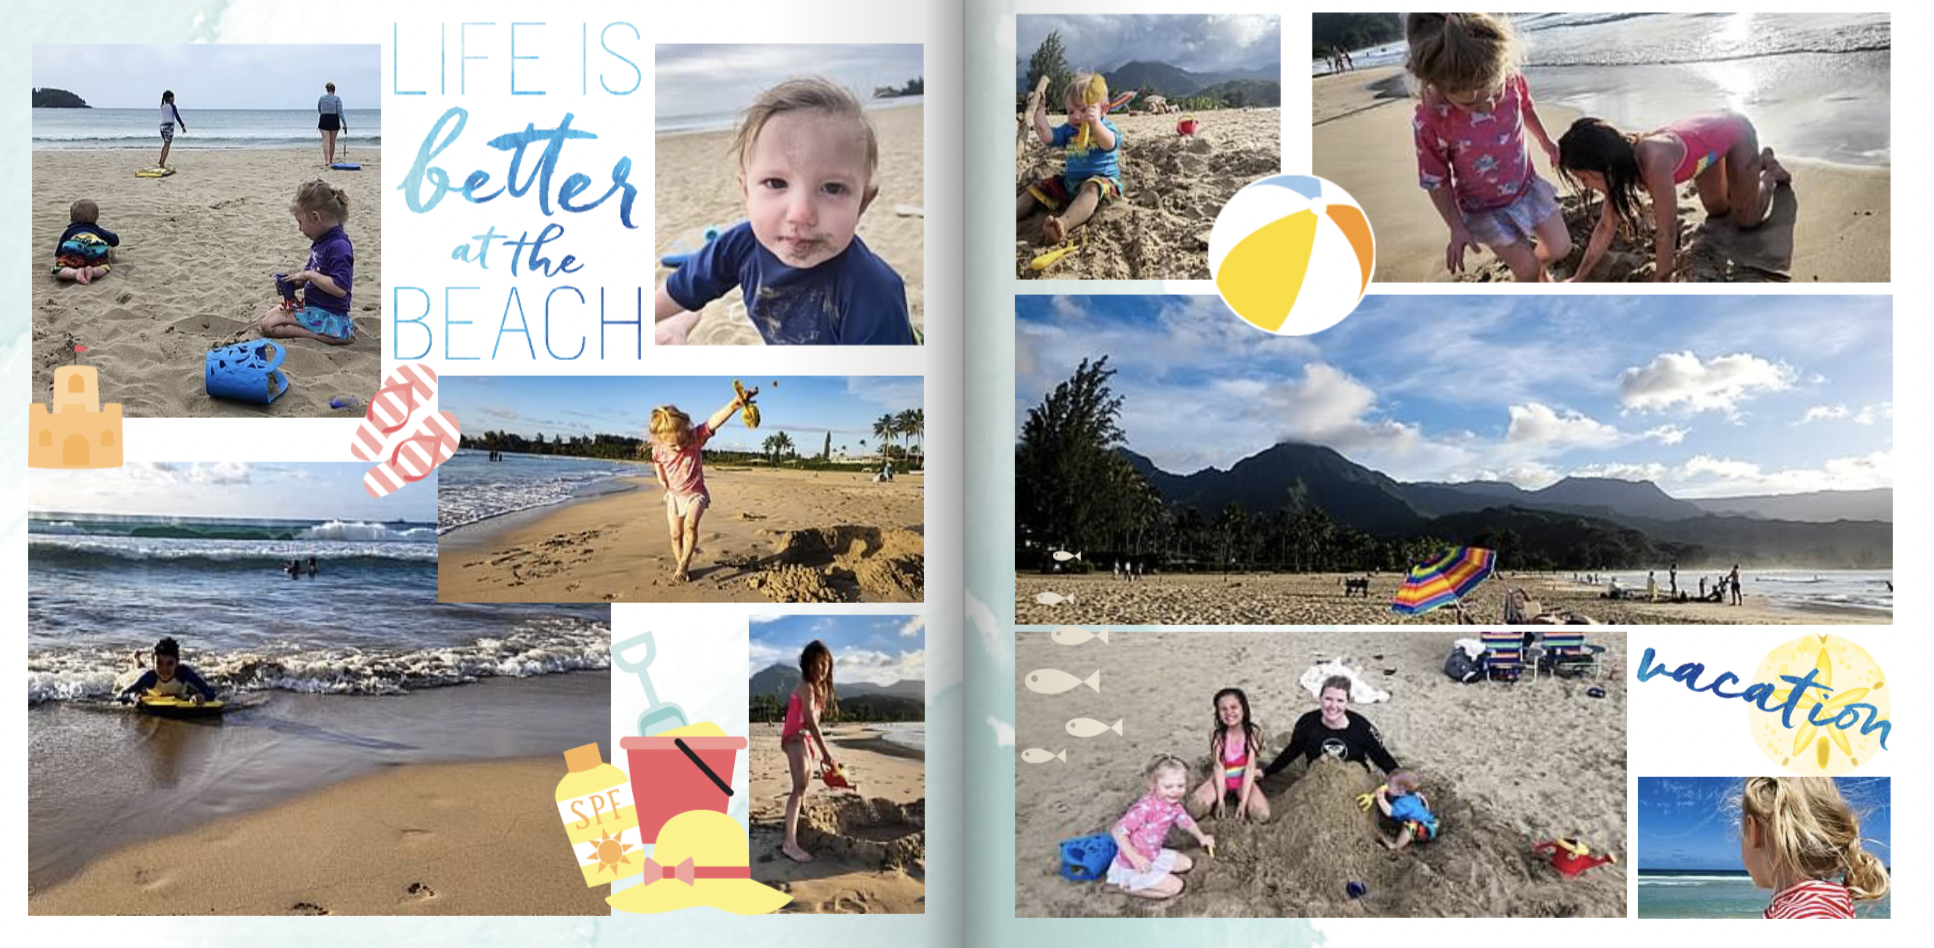 Kauai family vacation tips - having fun at the beach with the kids